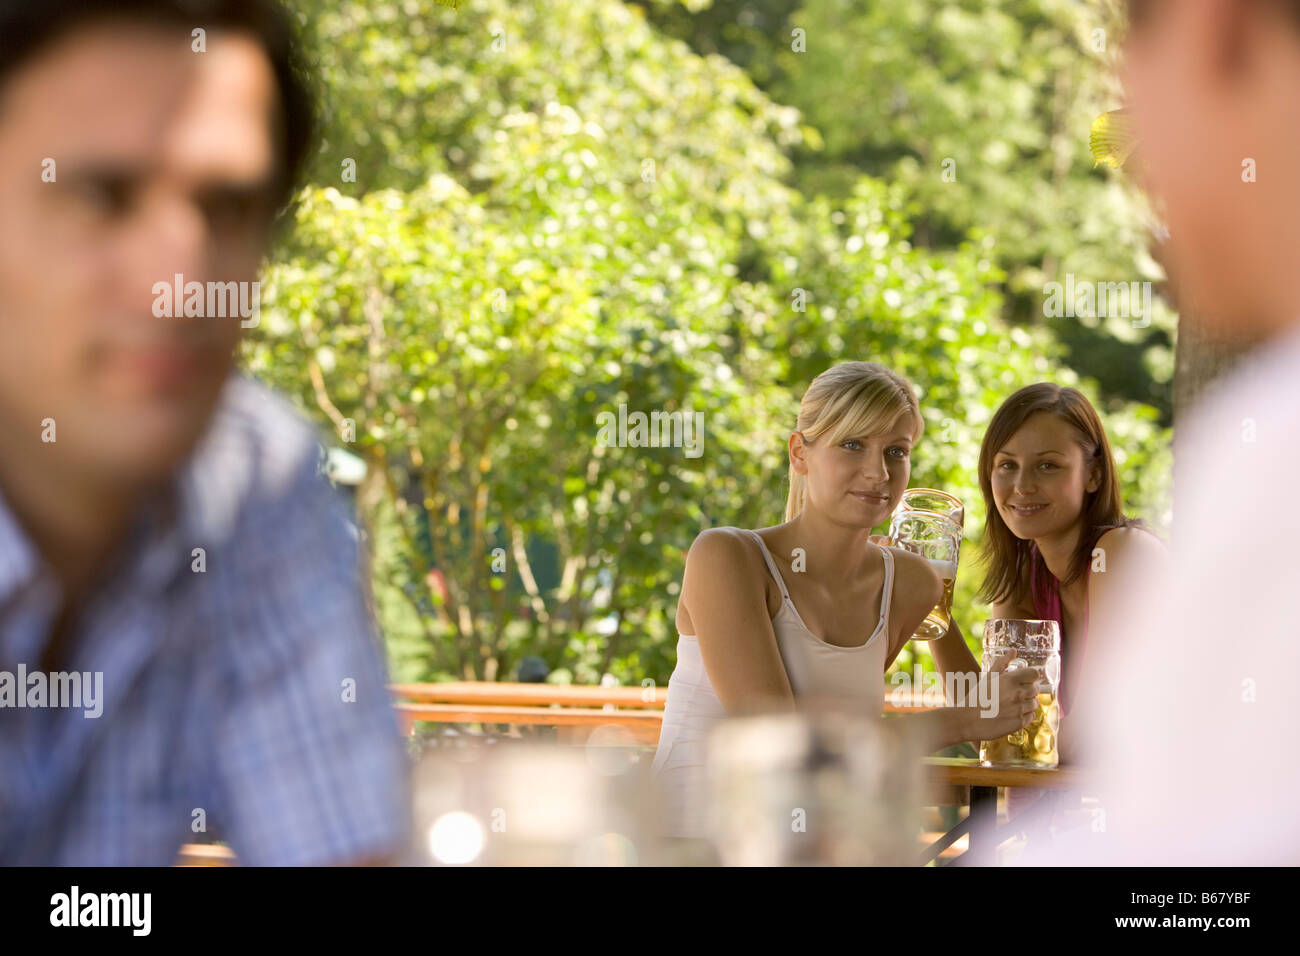 Flirt in beer garden, Two young women and two men flirting in a beer garden, Lake Starnberg, Bavaria, Germany Stock Photo